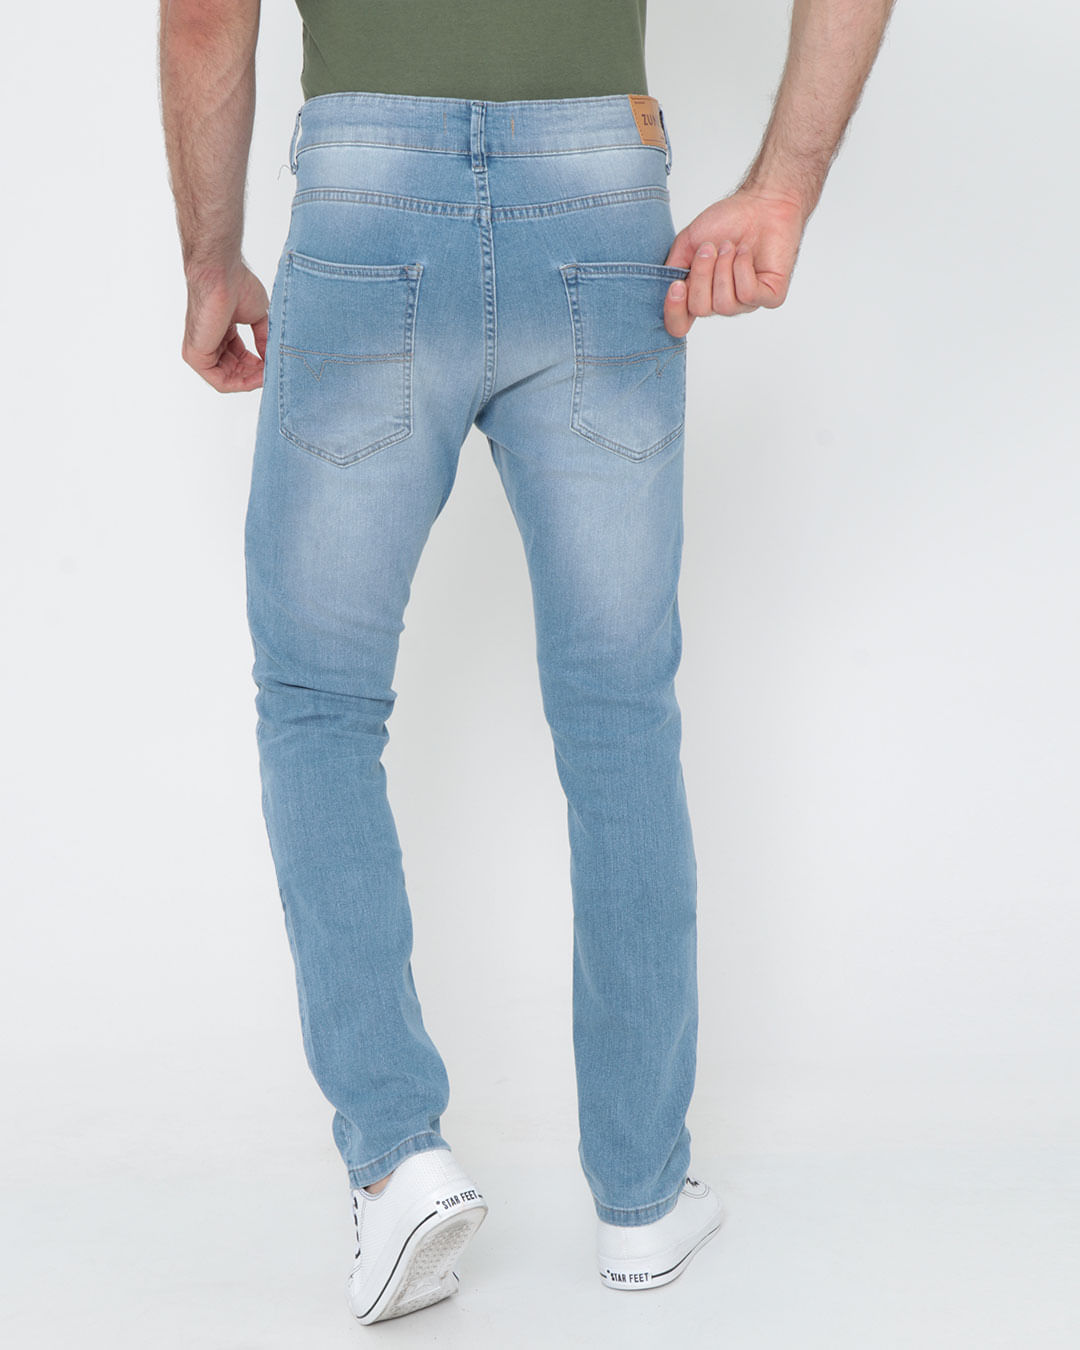 Calca-Jeans-Masculina-Basica-Skiny-Zune-Azul-Claro